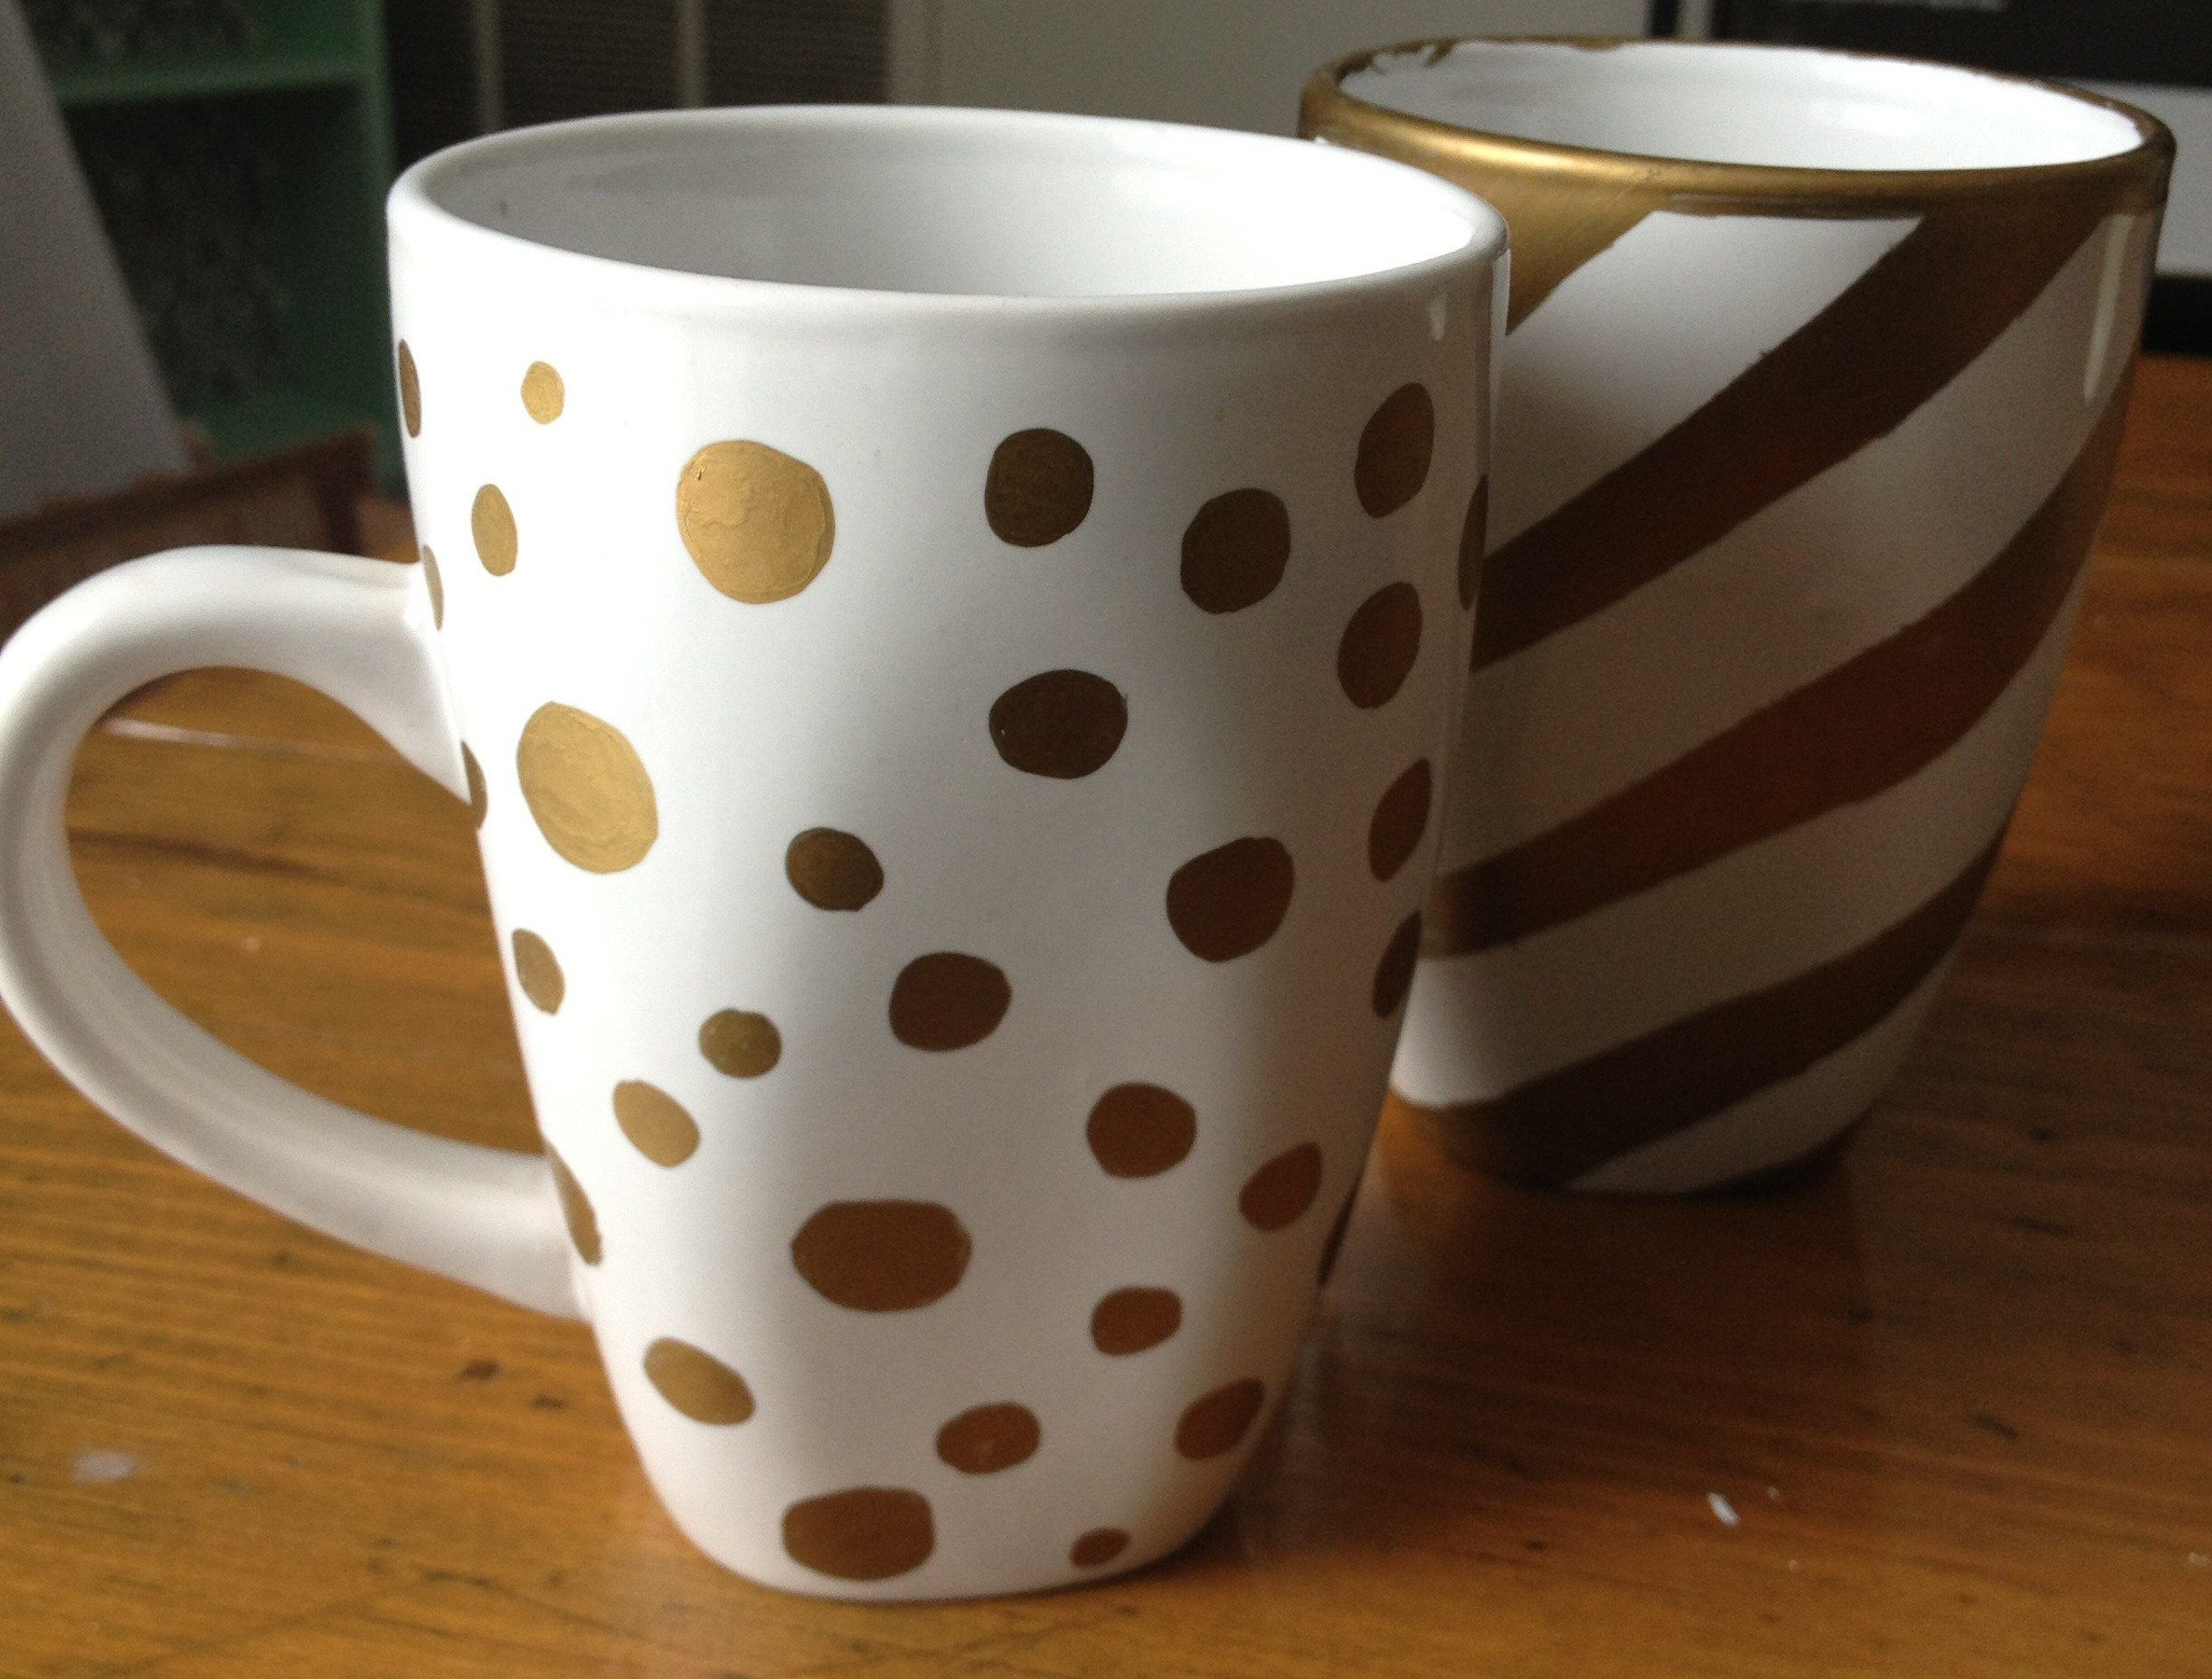 Best ideas about DIY Coffee Mugs
. Save or Pin DIY Sharpie Coffee Mugs Olio in Iowa Now.